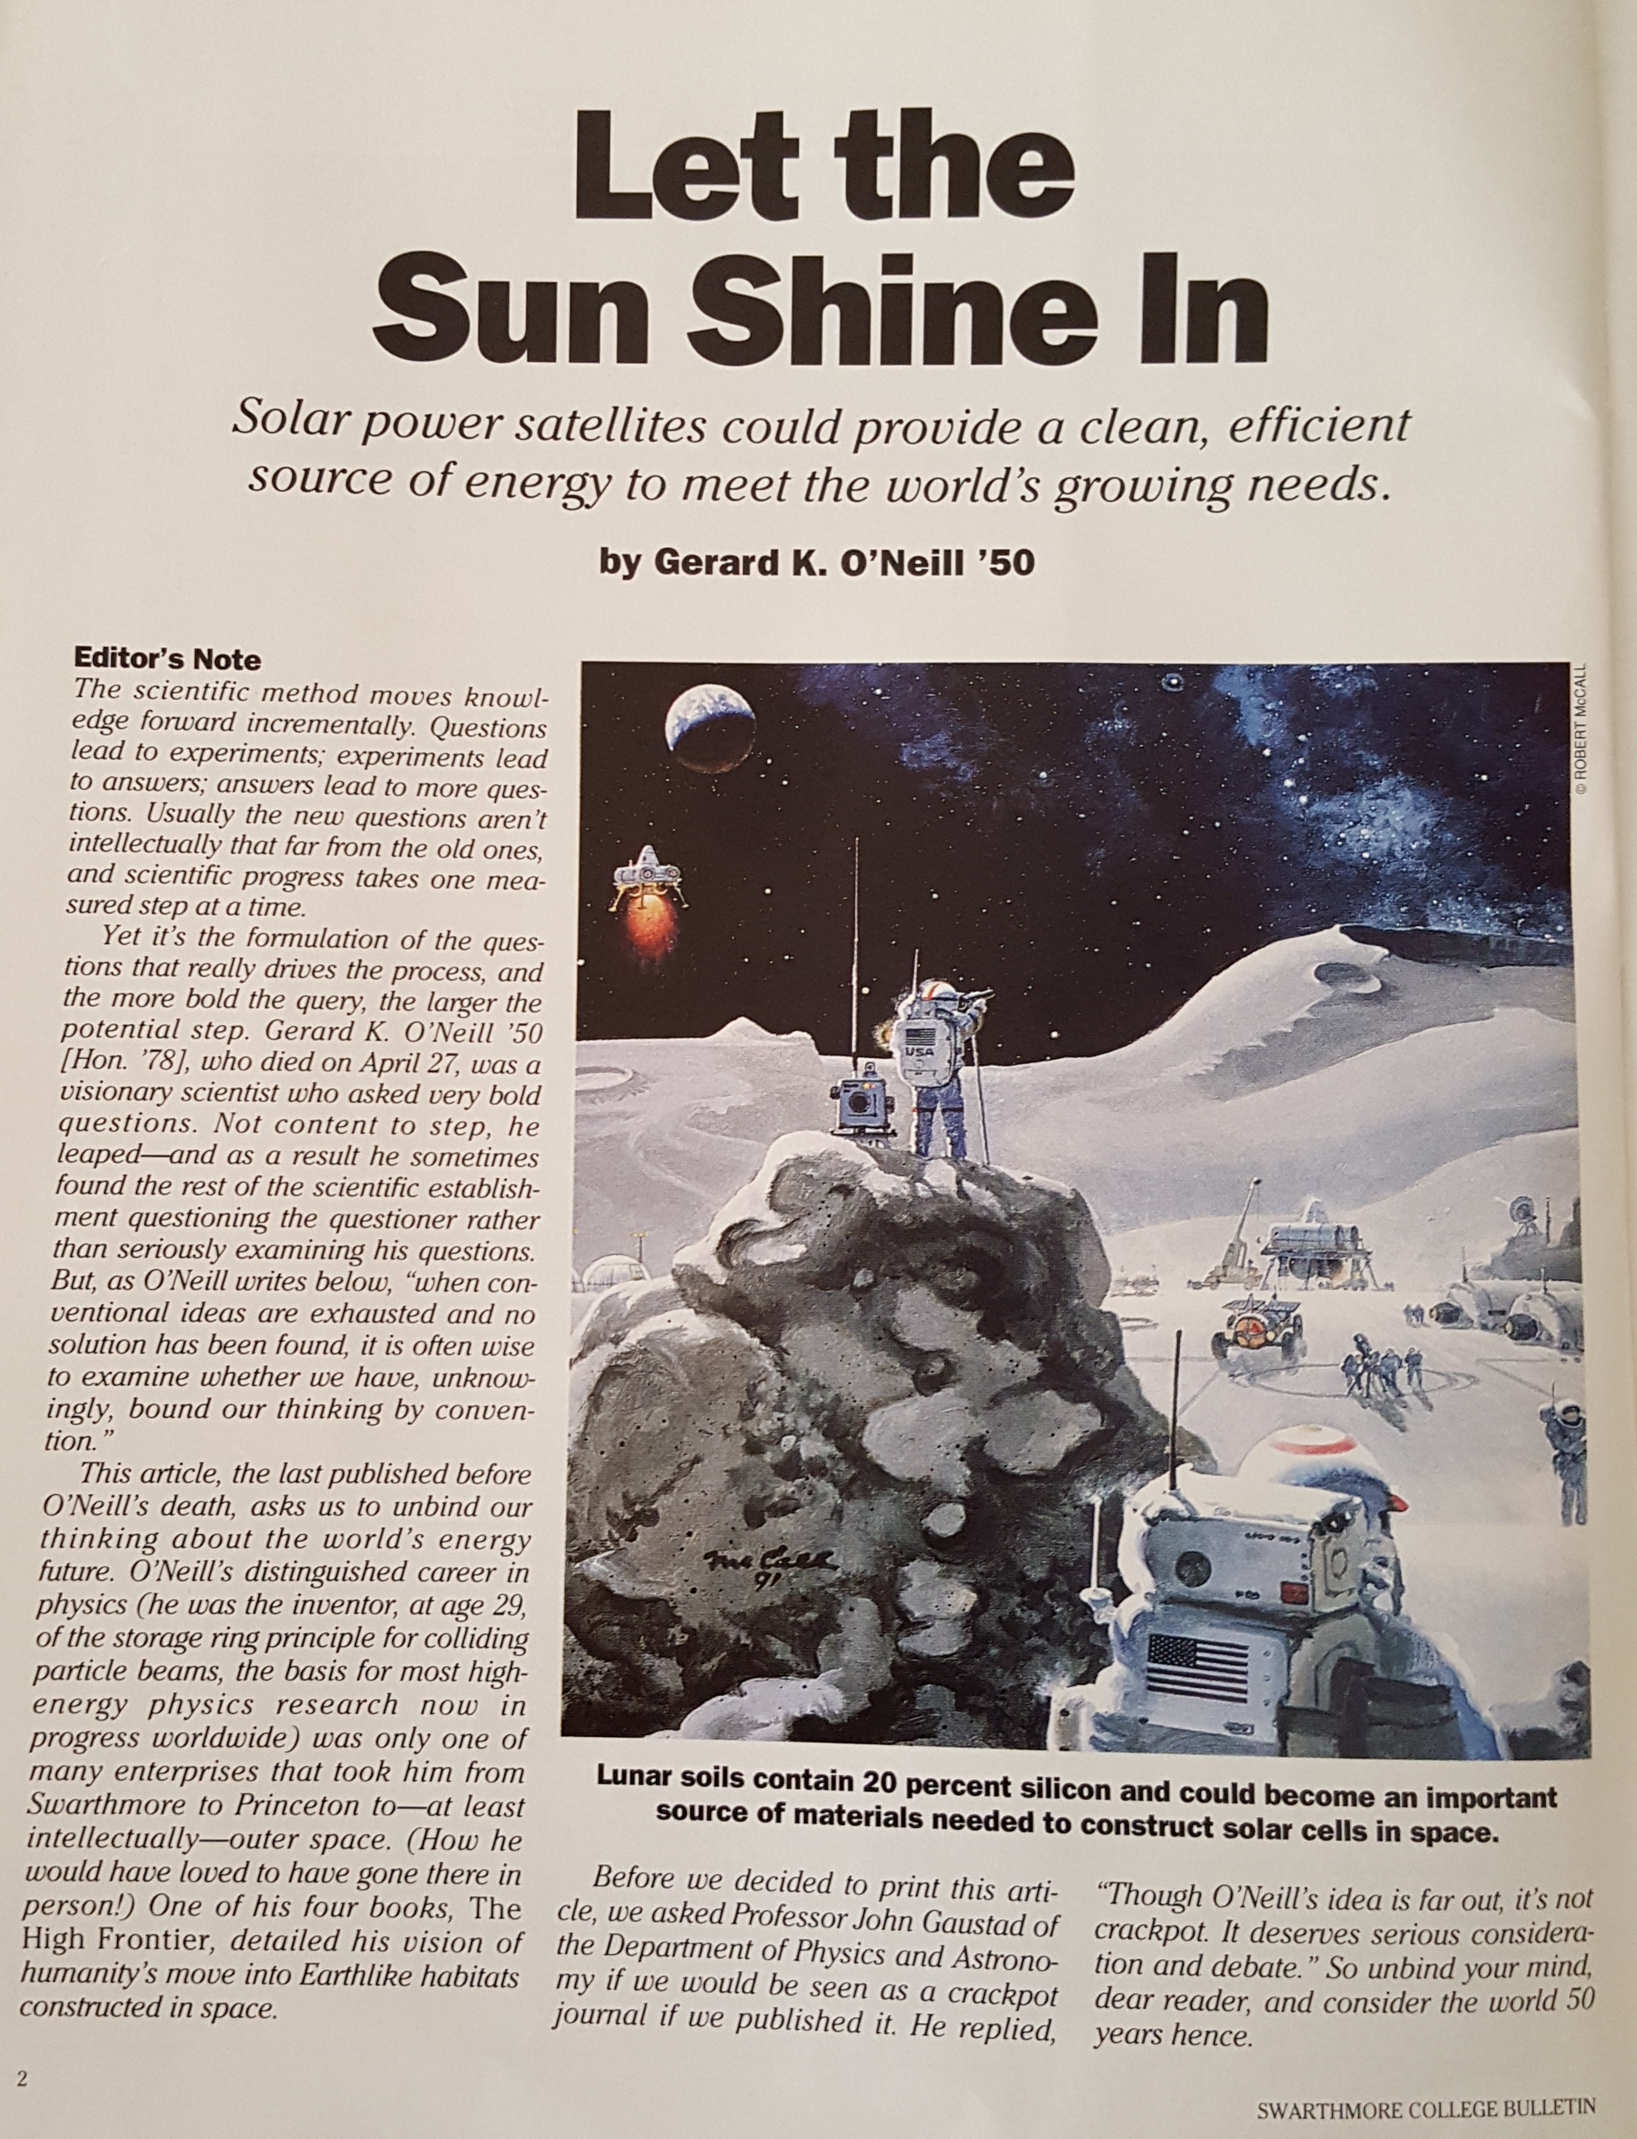 Swarthmore College Bulletin August 1992 GKON article